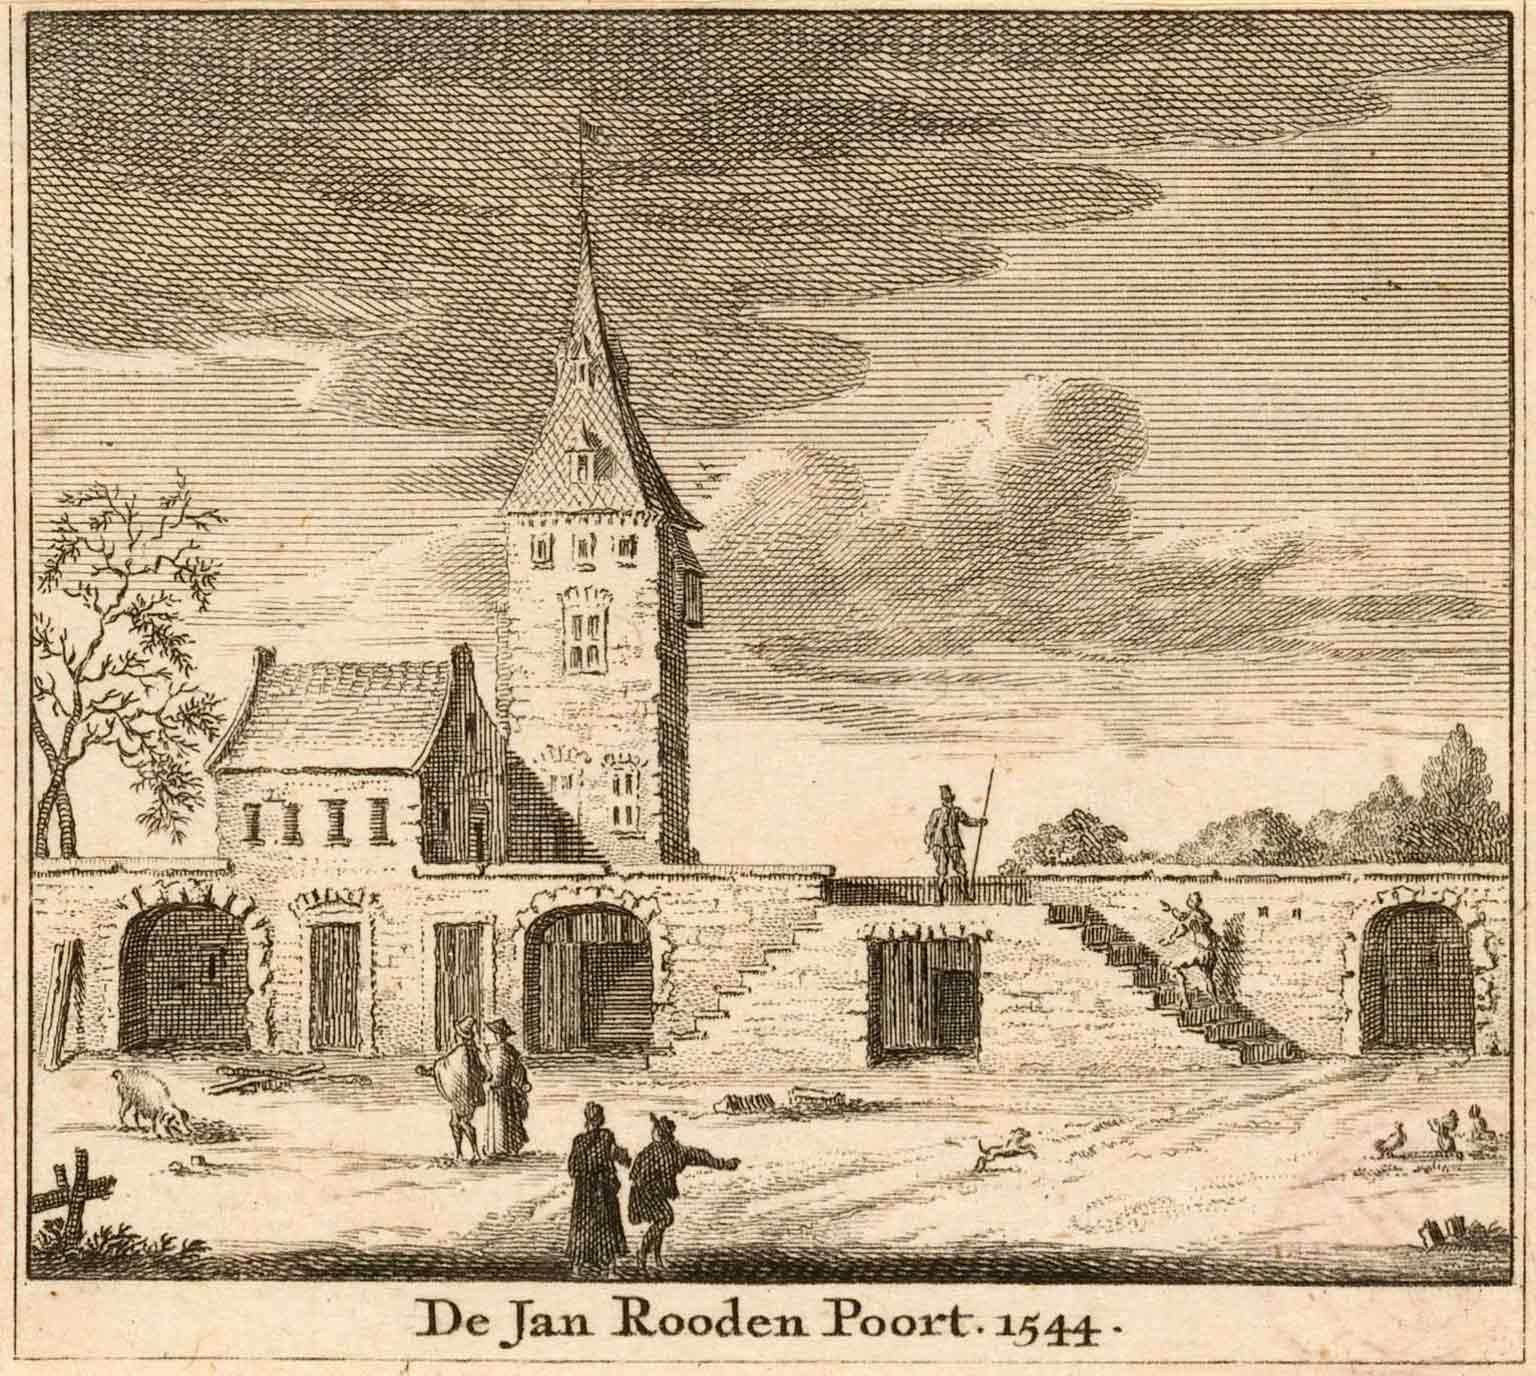 Jan Roodenpoort, Amsterdam, in 1544